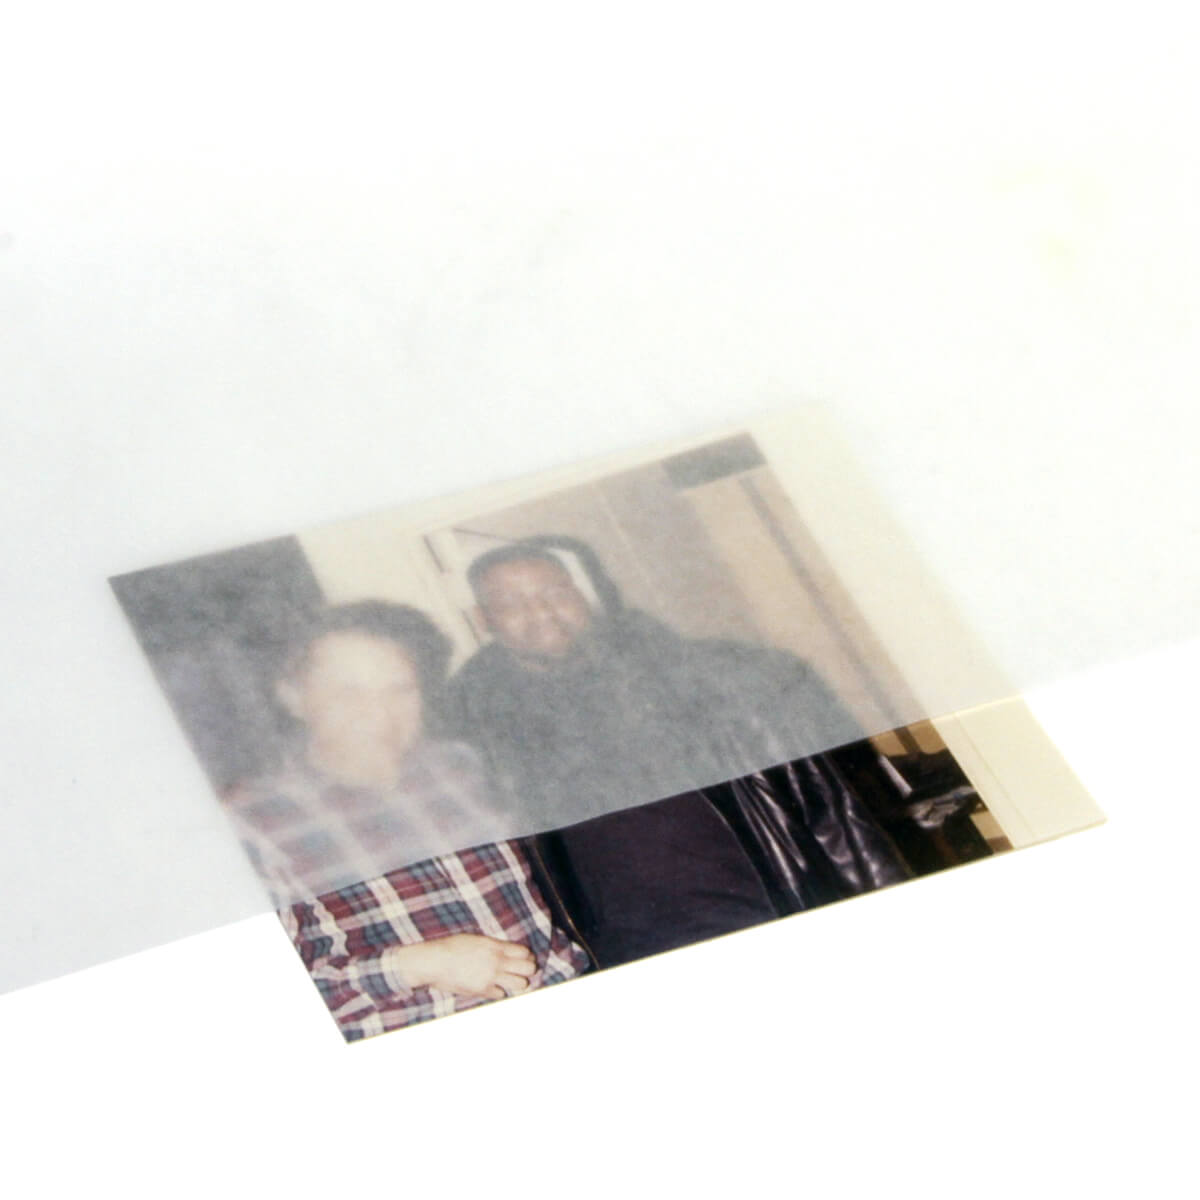 Buy Glassine Interleaving Paper, 4x8, Acid Free Photo Paper Barrier